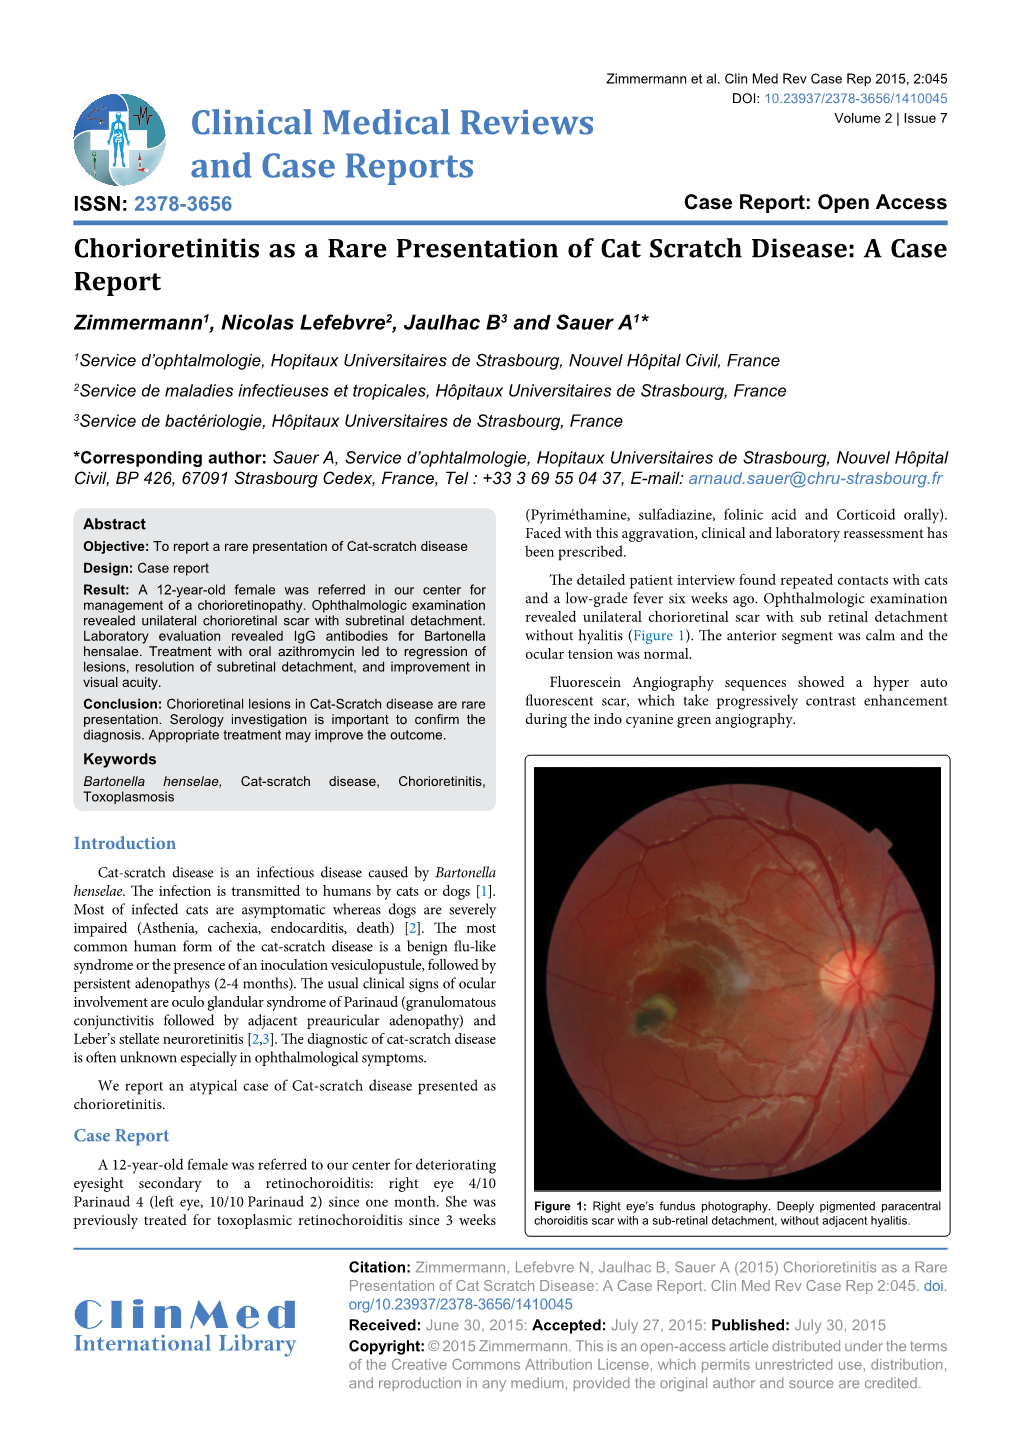 Chorioretinitis As a Rare Presentation of Cat Scratch Disease: a Case Report Zimmermann1, Nicolas Lefebvre2, Jaulhac B3 and Sauer A1*